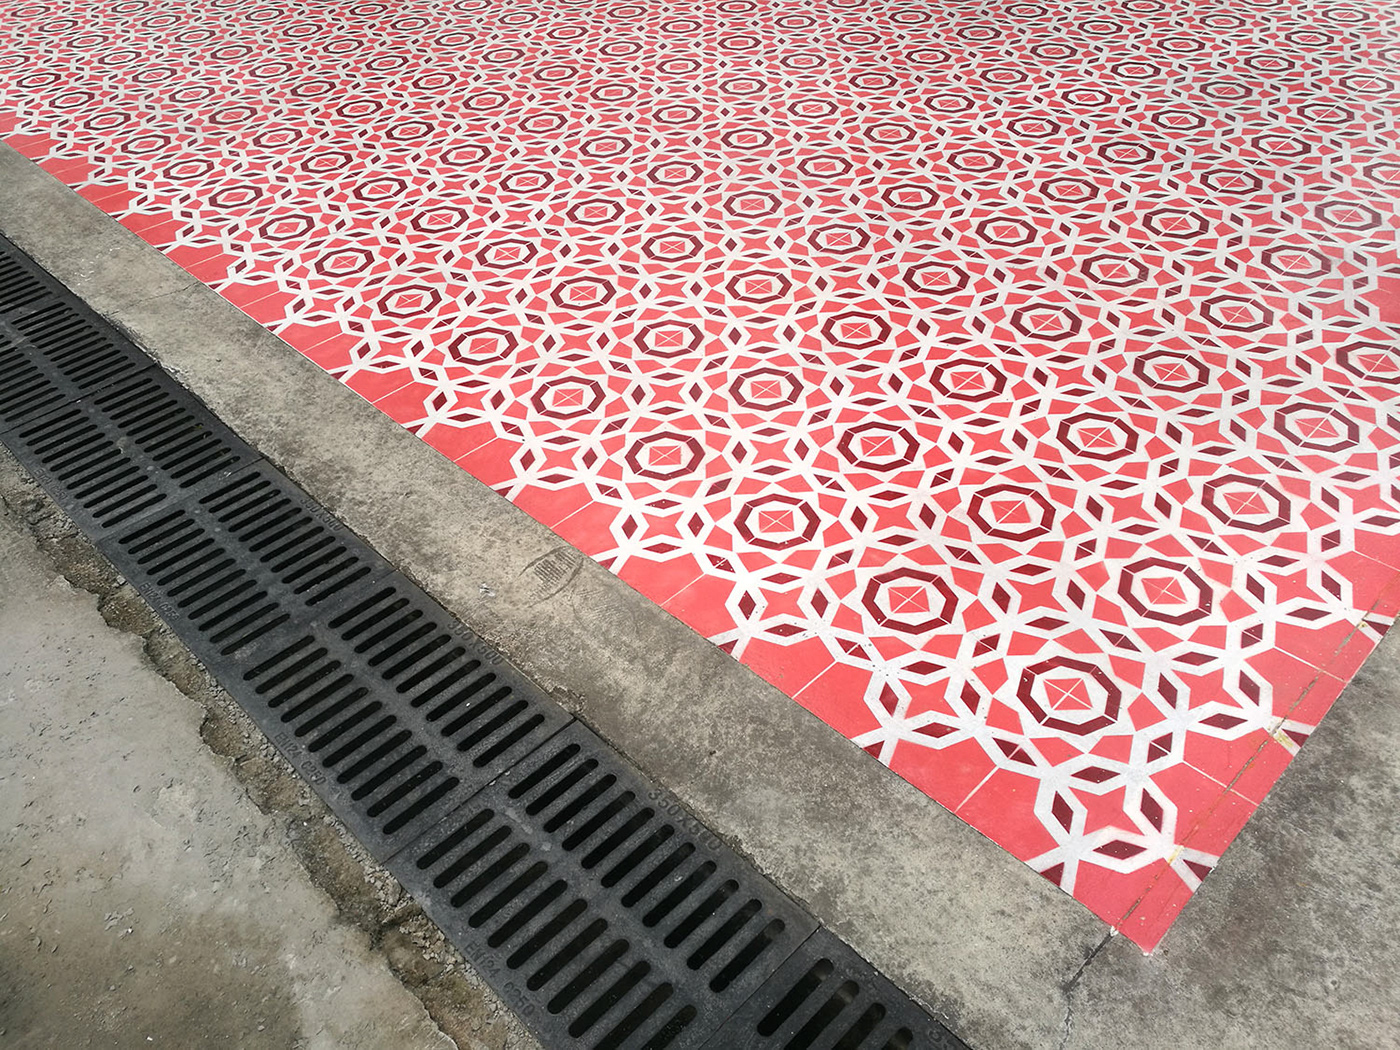 FLOOR tiles pattern suelo Piso patron hidraulico rojo china parking